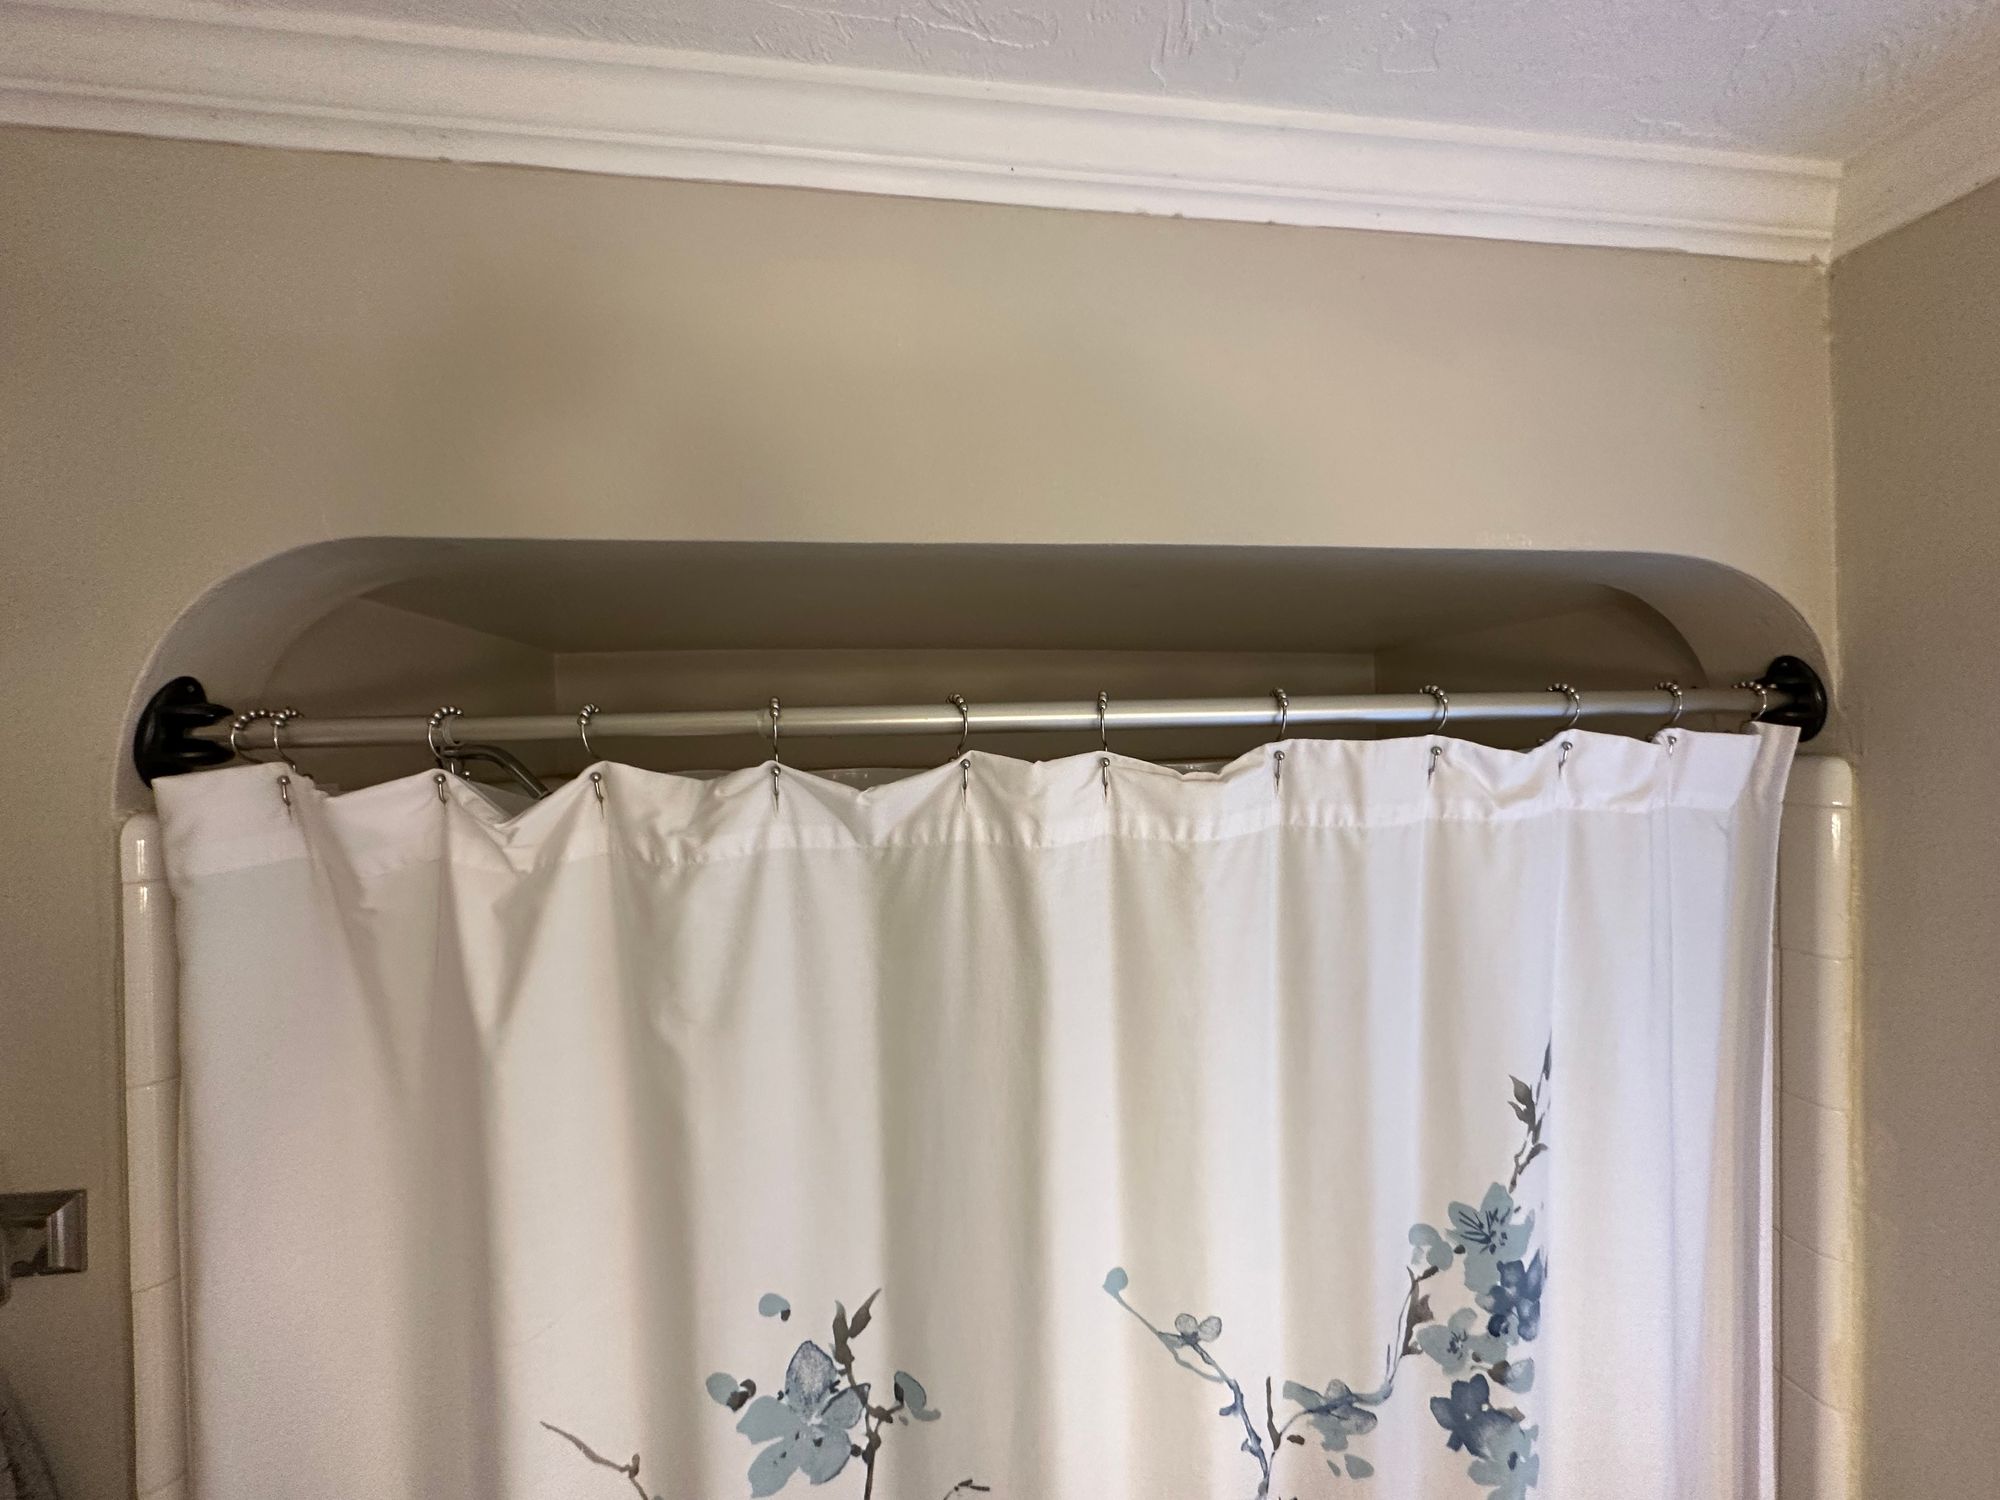 Shower curtain rod brackets